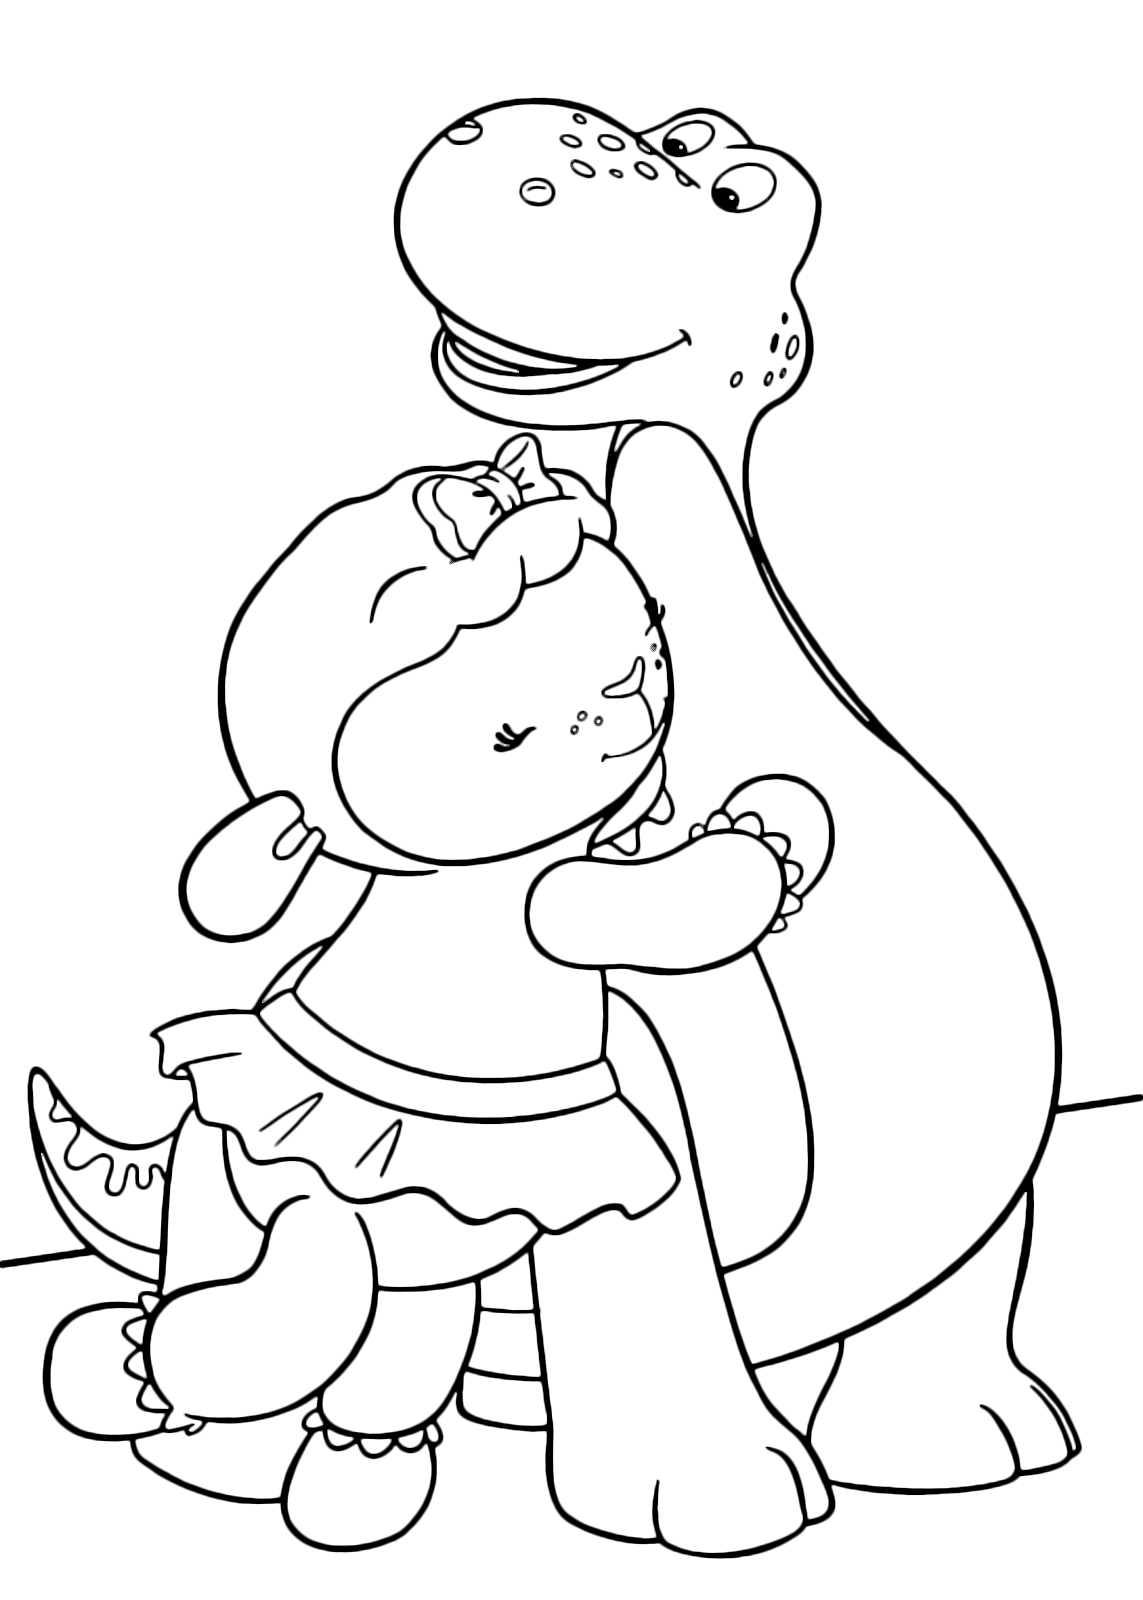 Doc McStuffins - Lambie the lamb hugs her friend Bronty the dinosaur